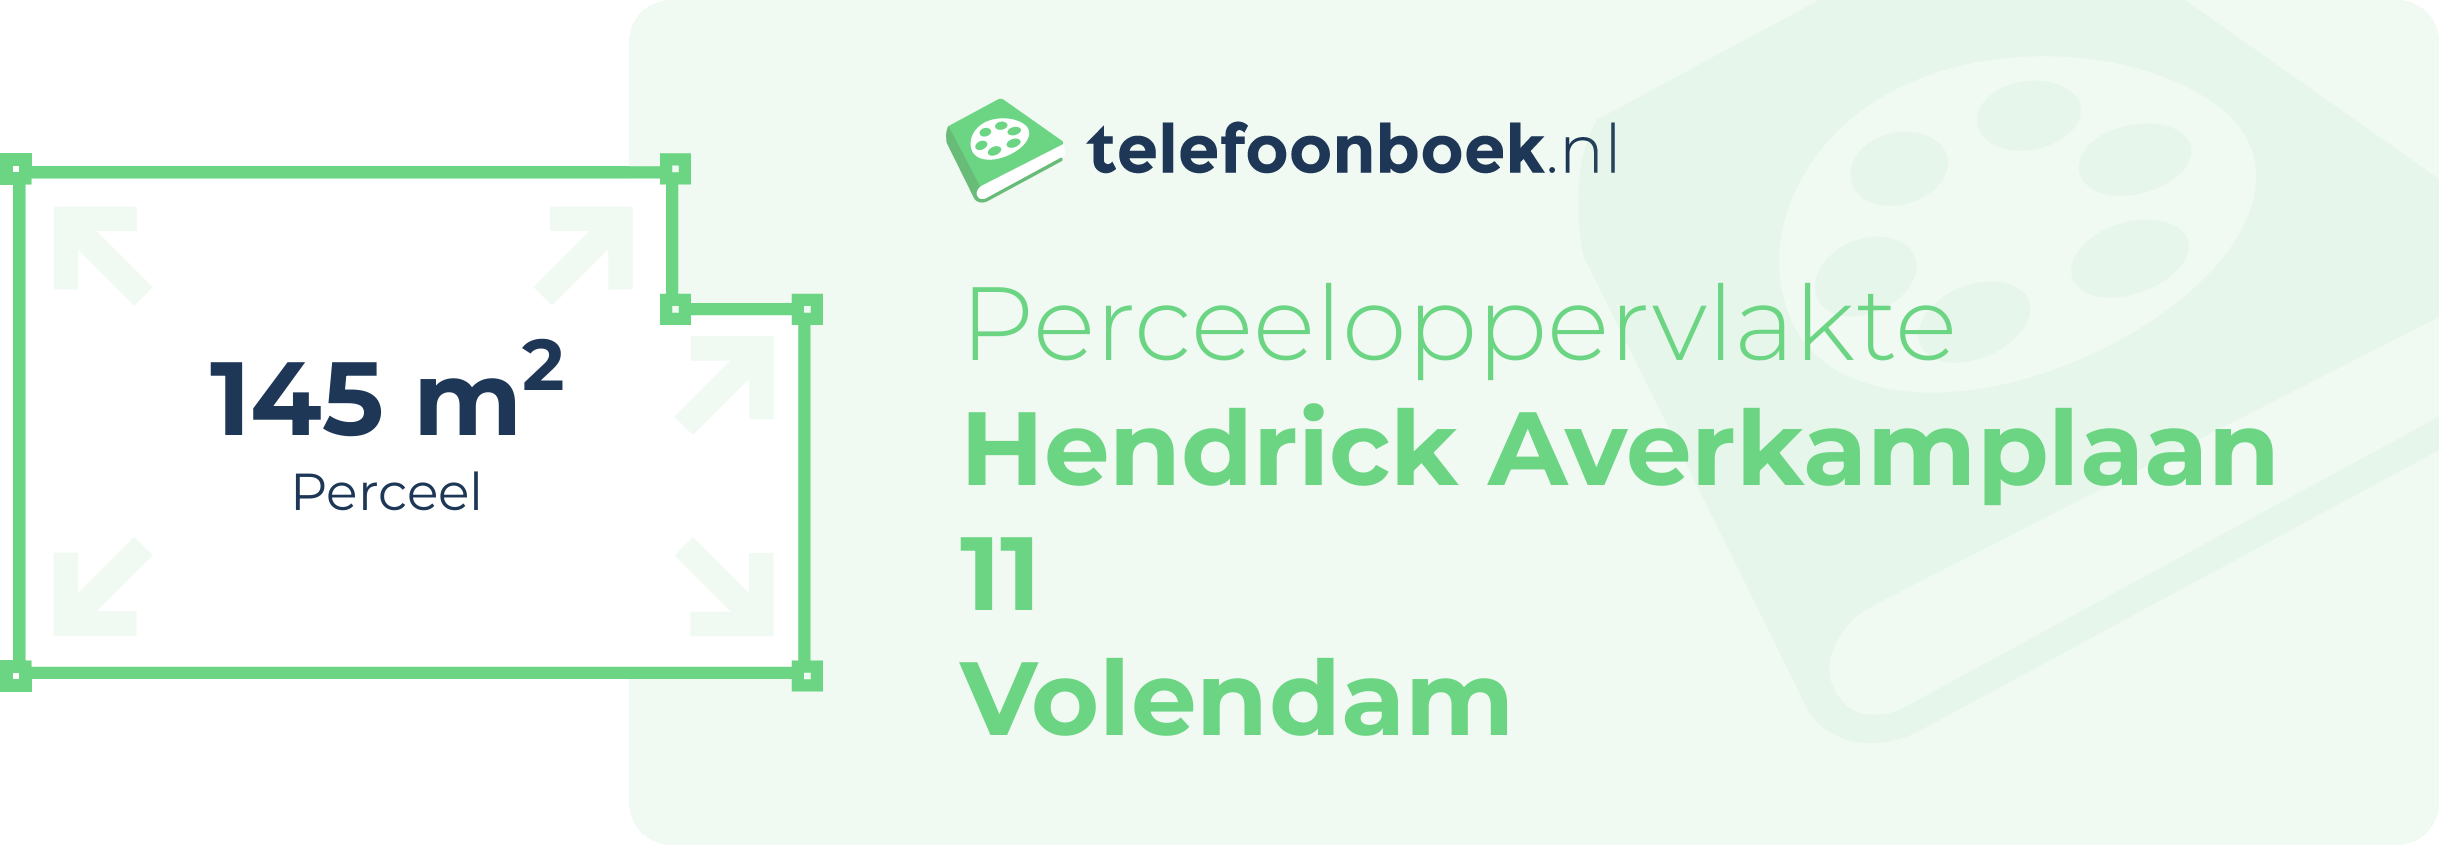 Perceeloppervlakte Hendrick Averkamplaan 11 Volendam